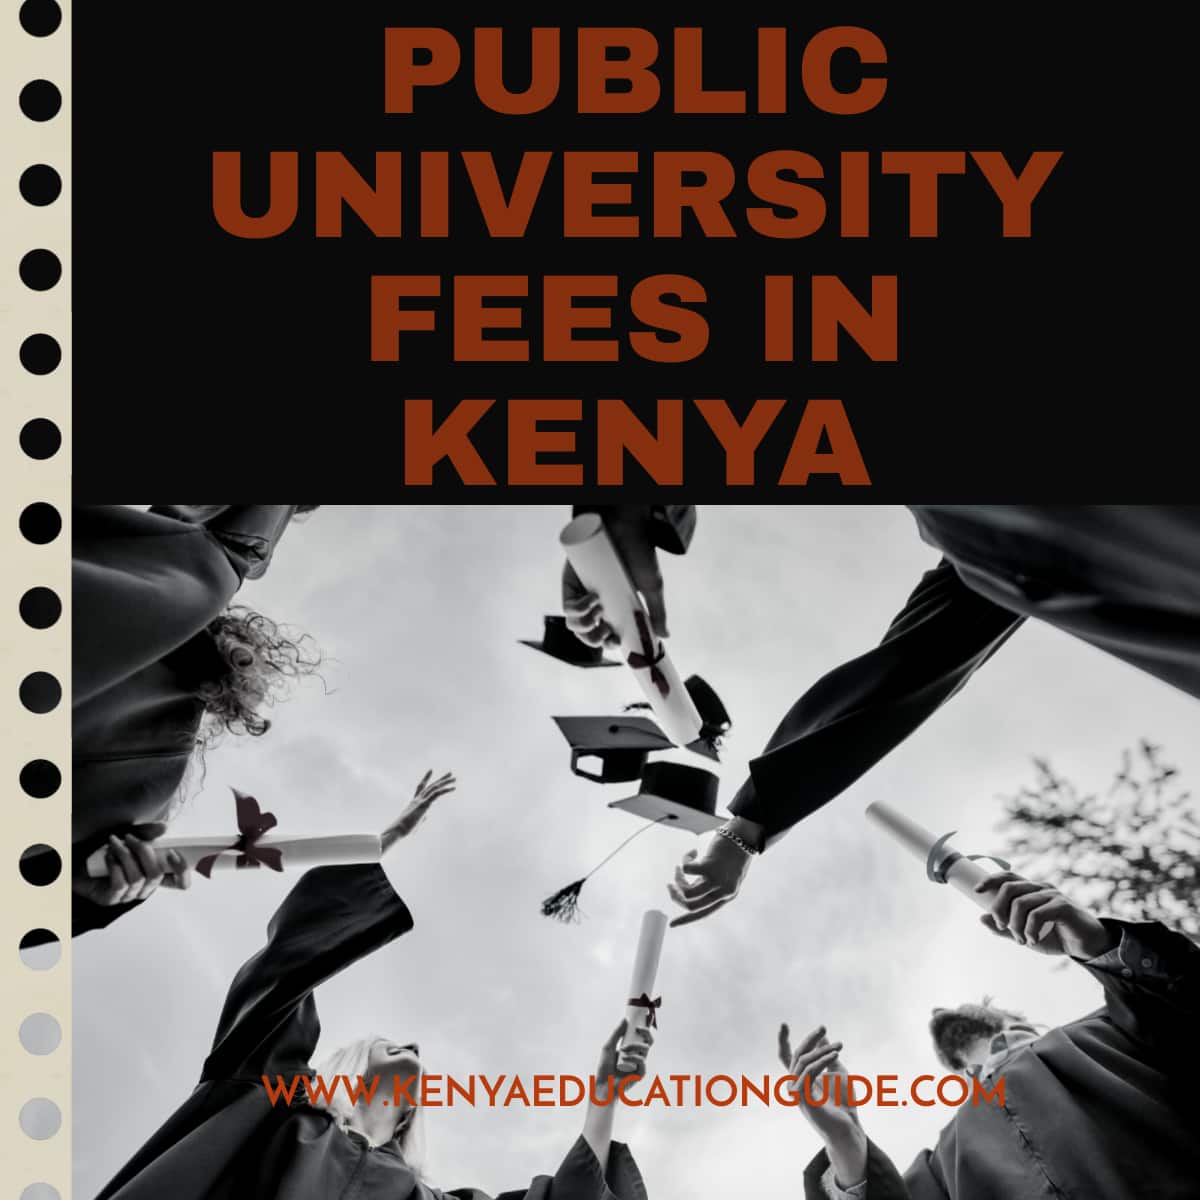 Public university fees in Kenya